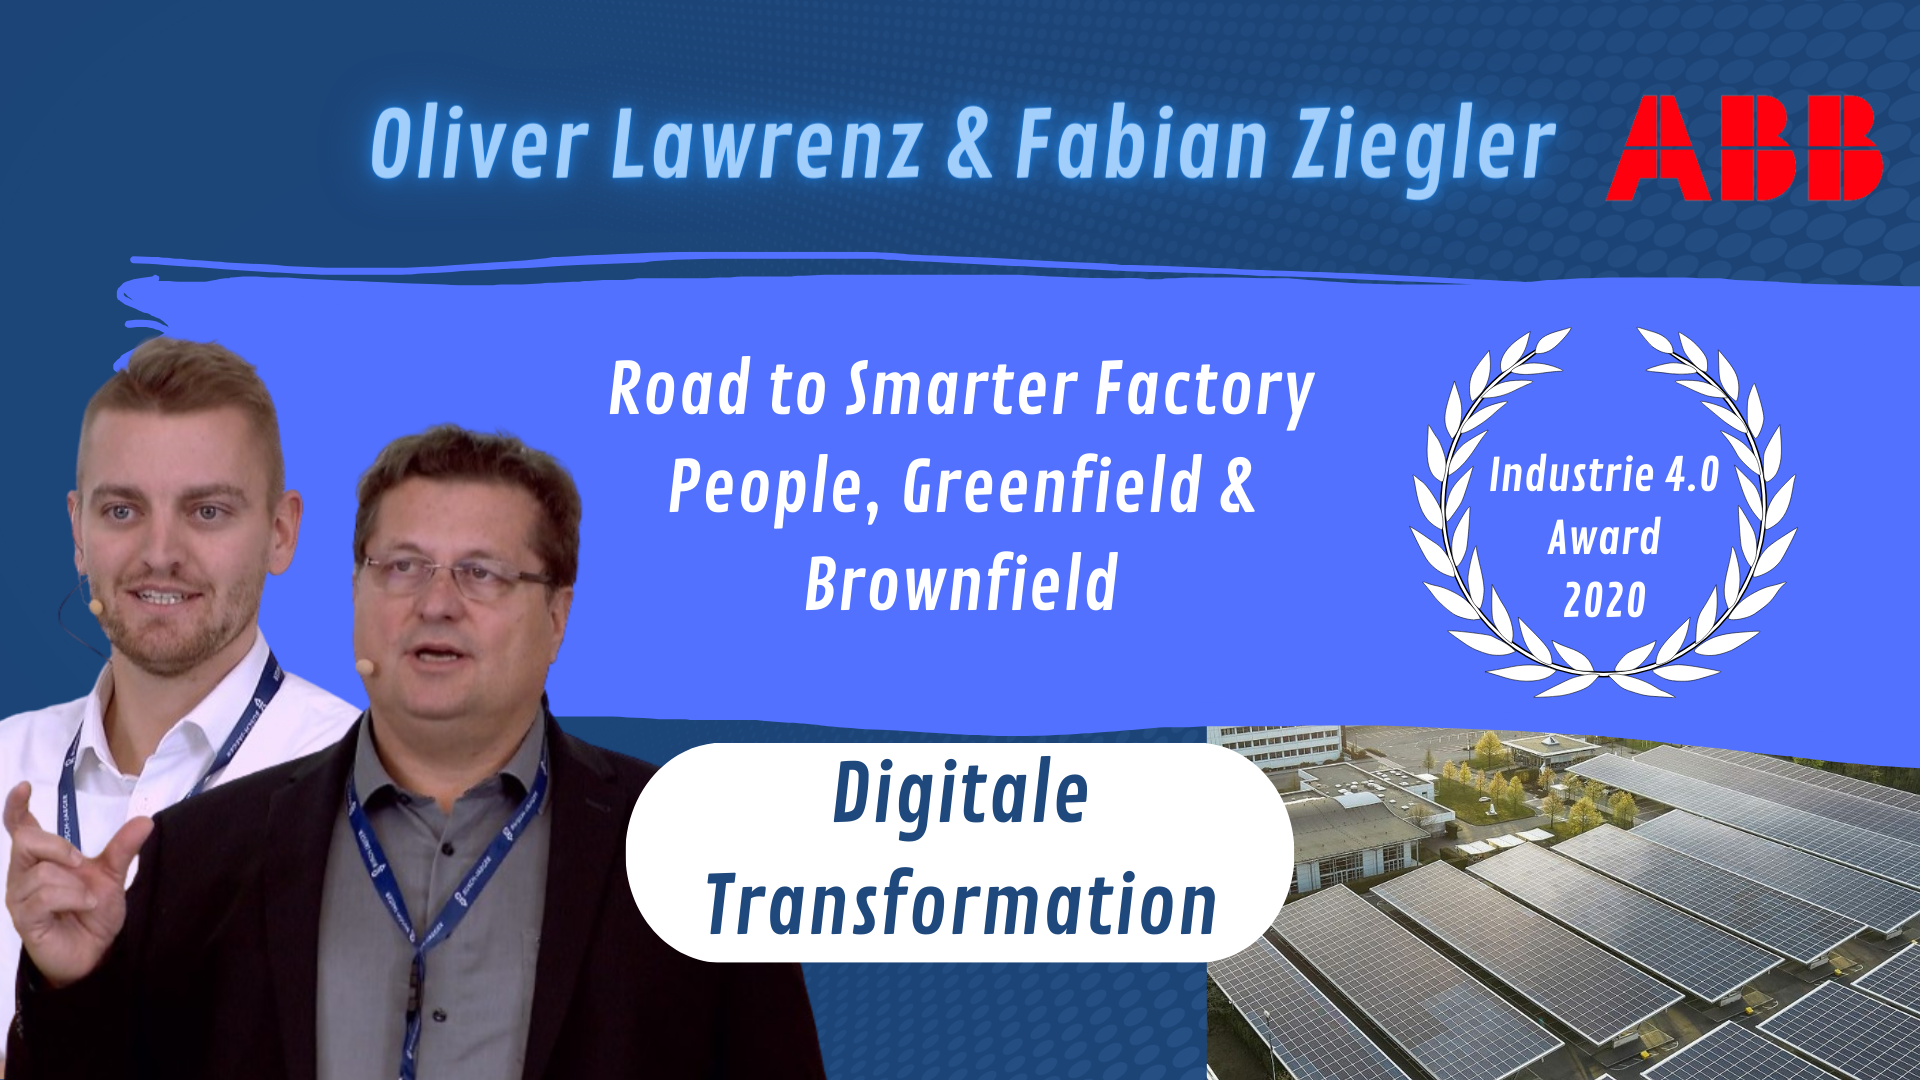 DIGITAL - Digitale Transformation mit Oliver Lawrenz & Fabian Ziegler